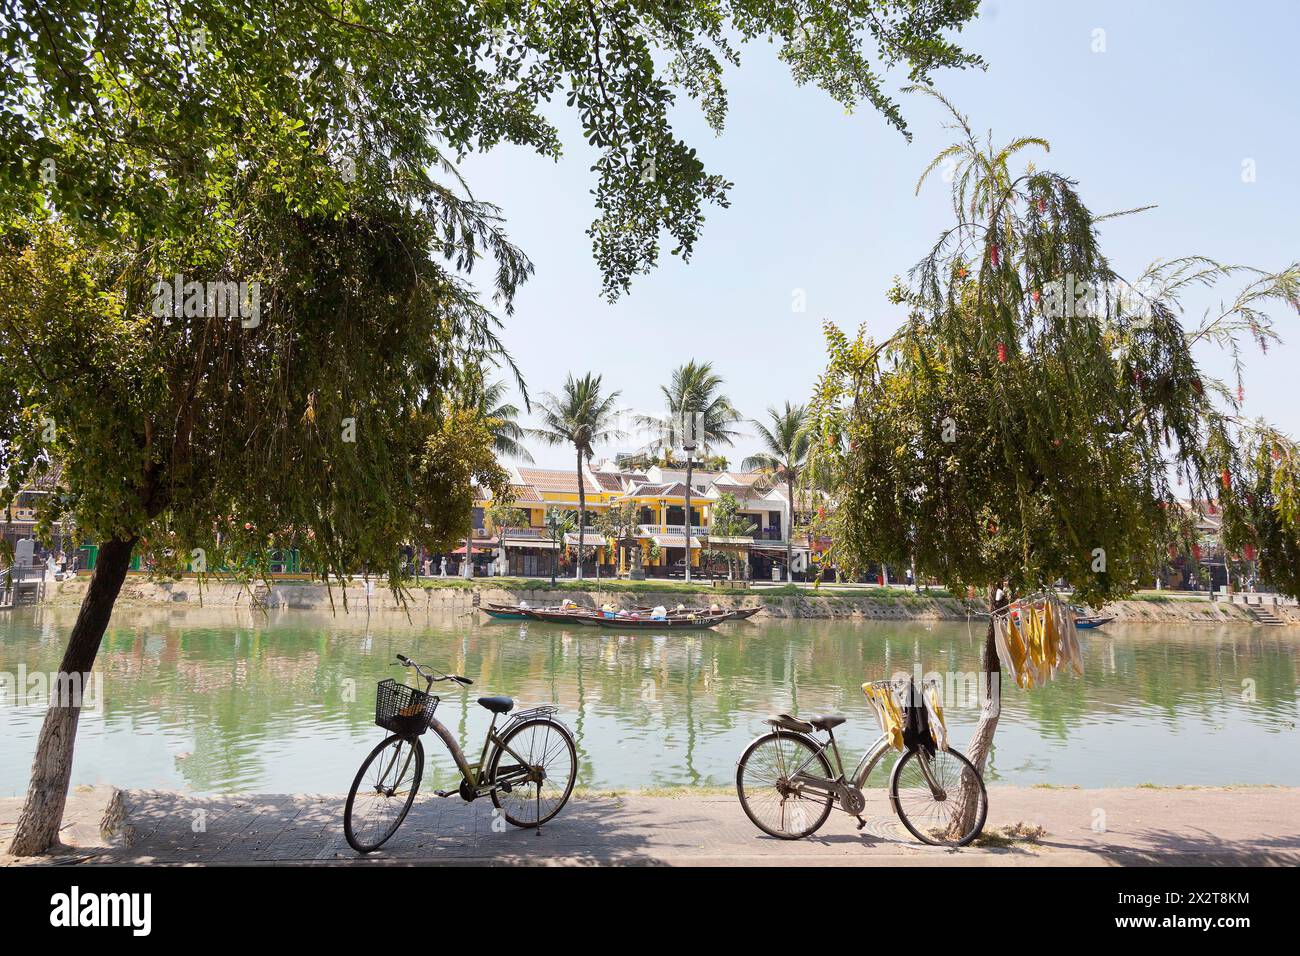 Hoi an riverside, parked bicycles, Hoi an, Vietnam Stock Photo